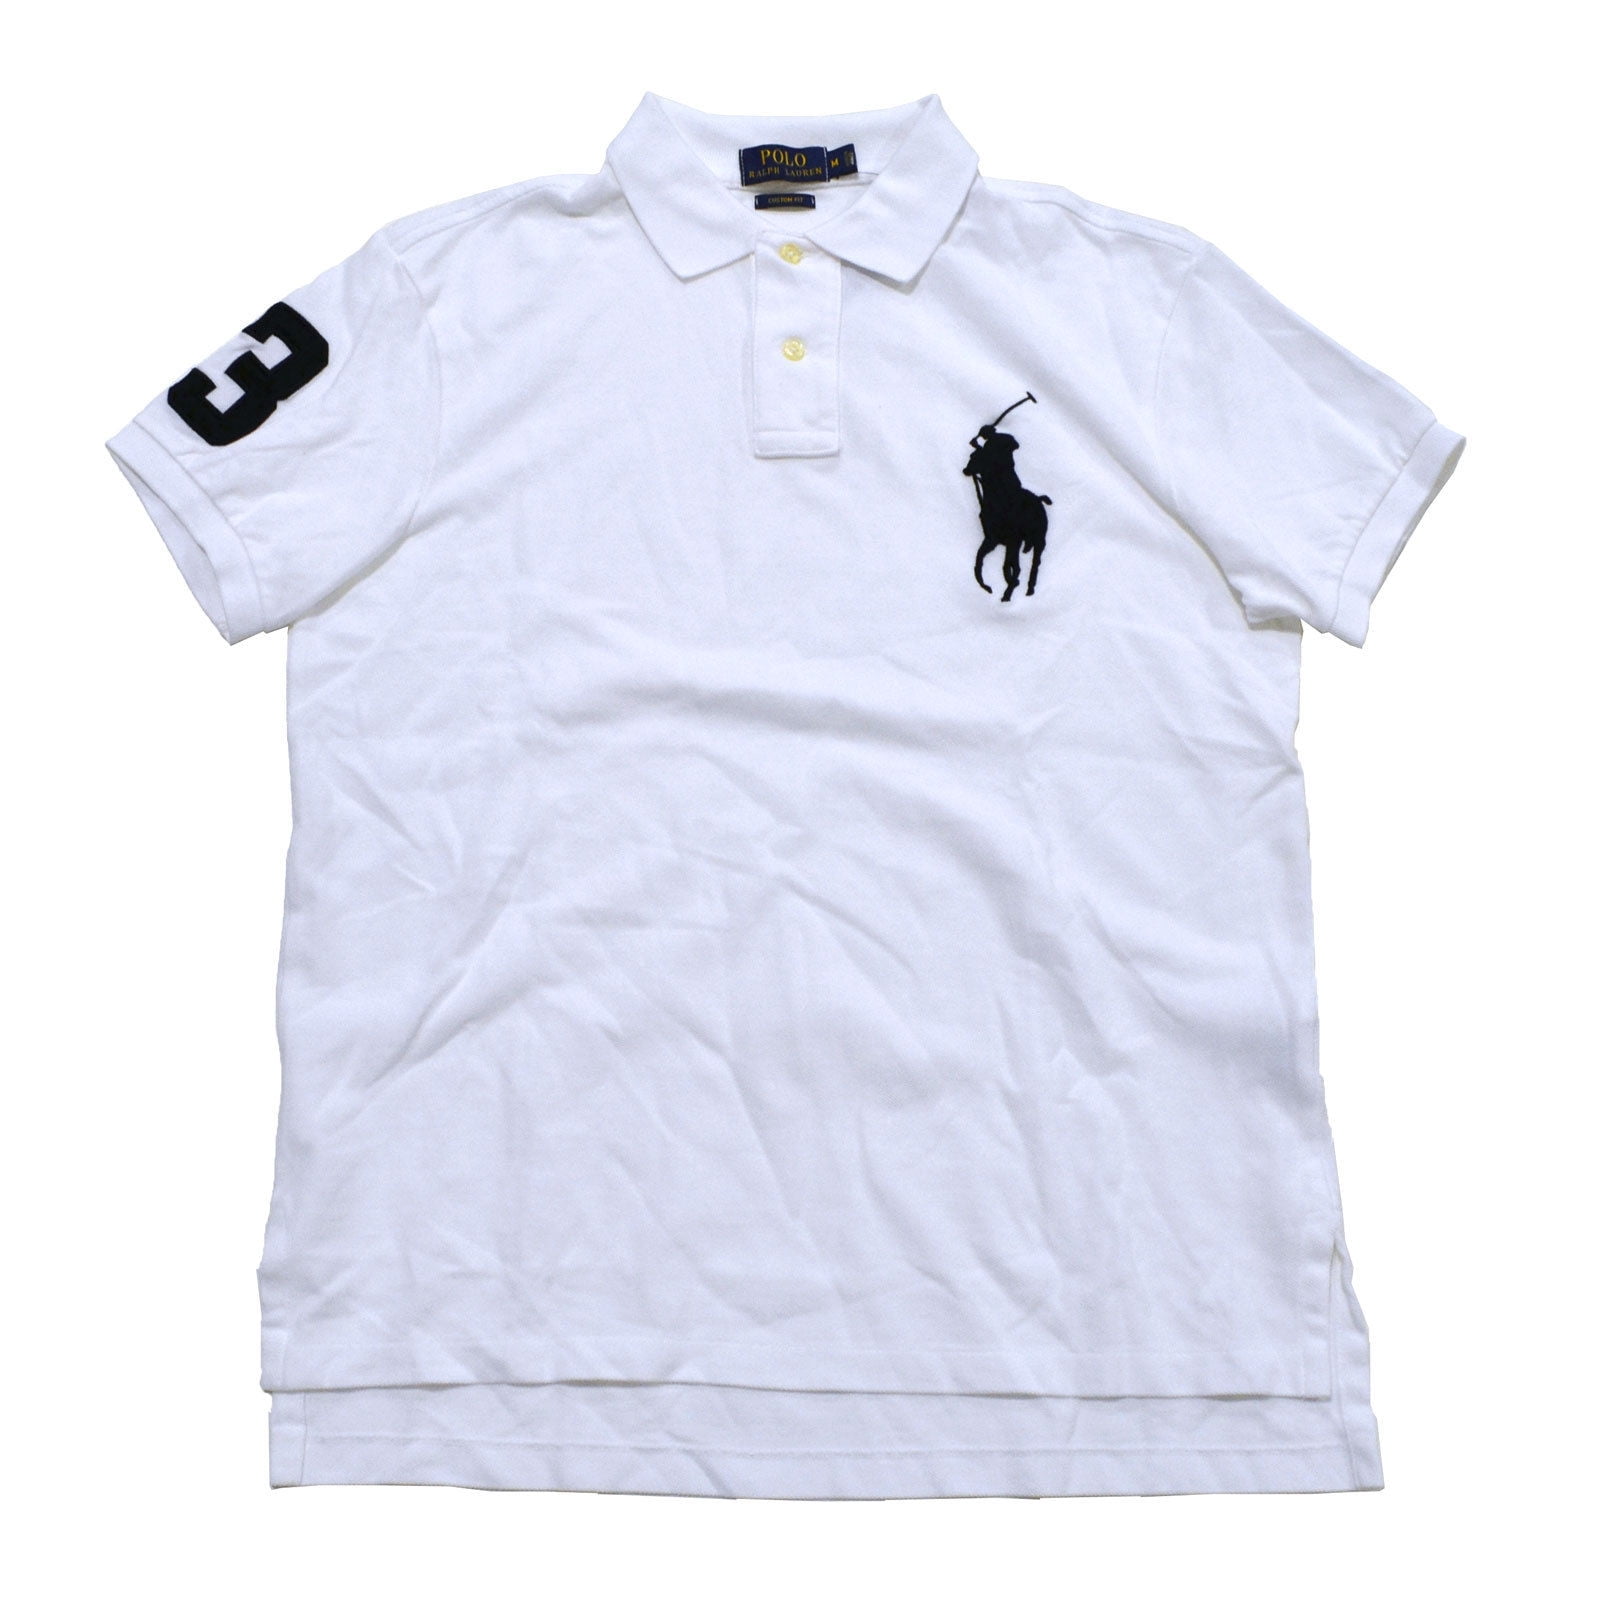 white polo ralph lauren shirt